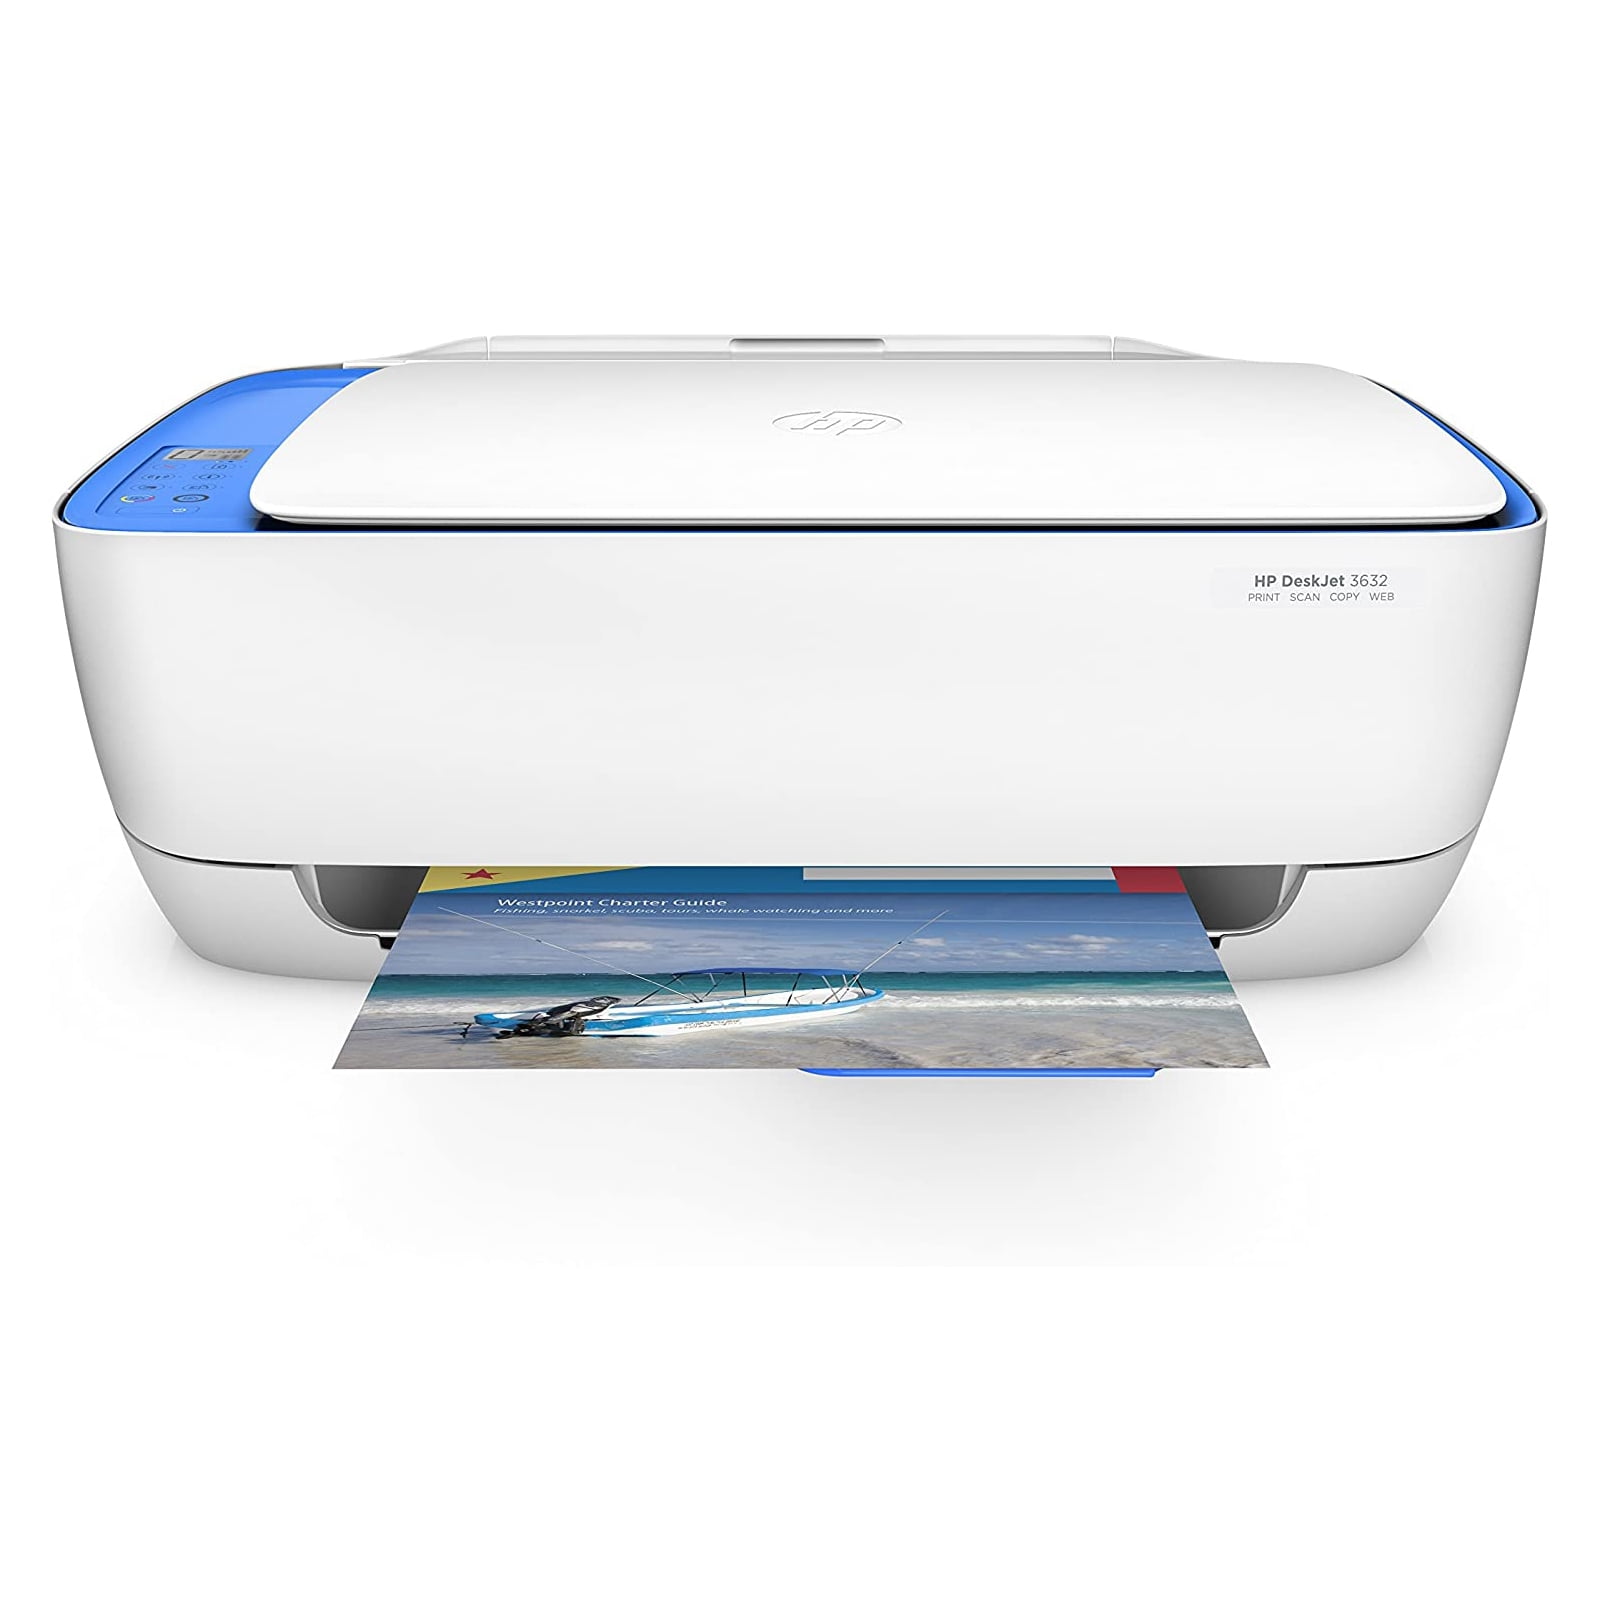 DeskJet 3632 All-in-One Wireless Printer, Print Copy HP Instant Ink -